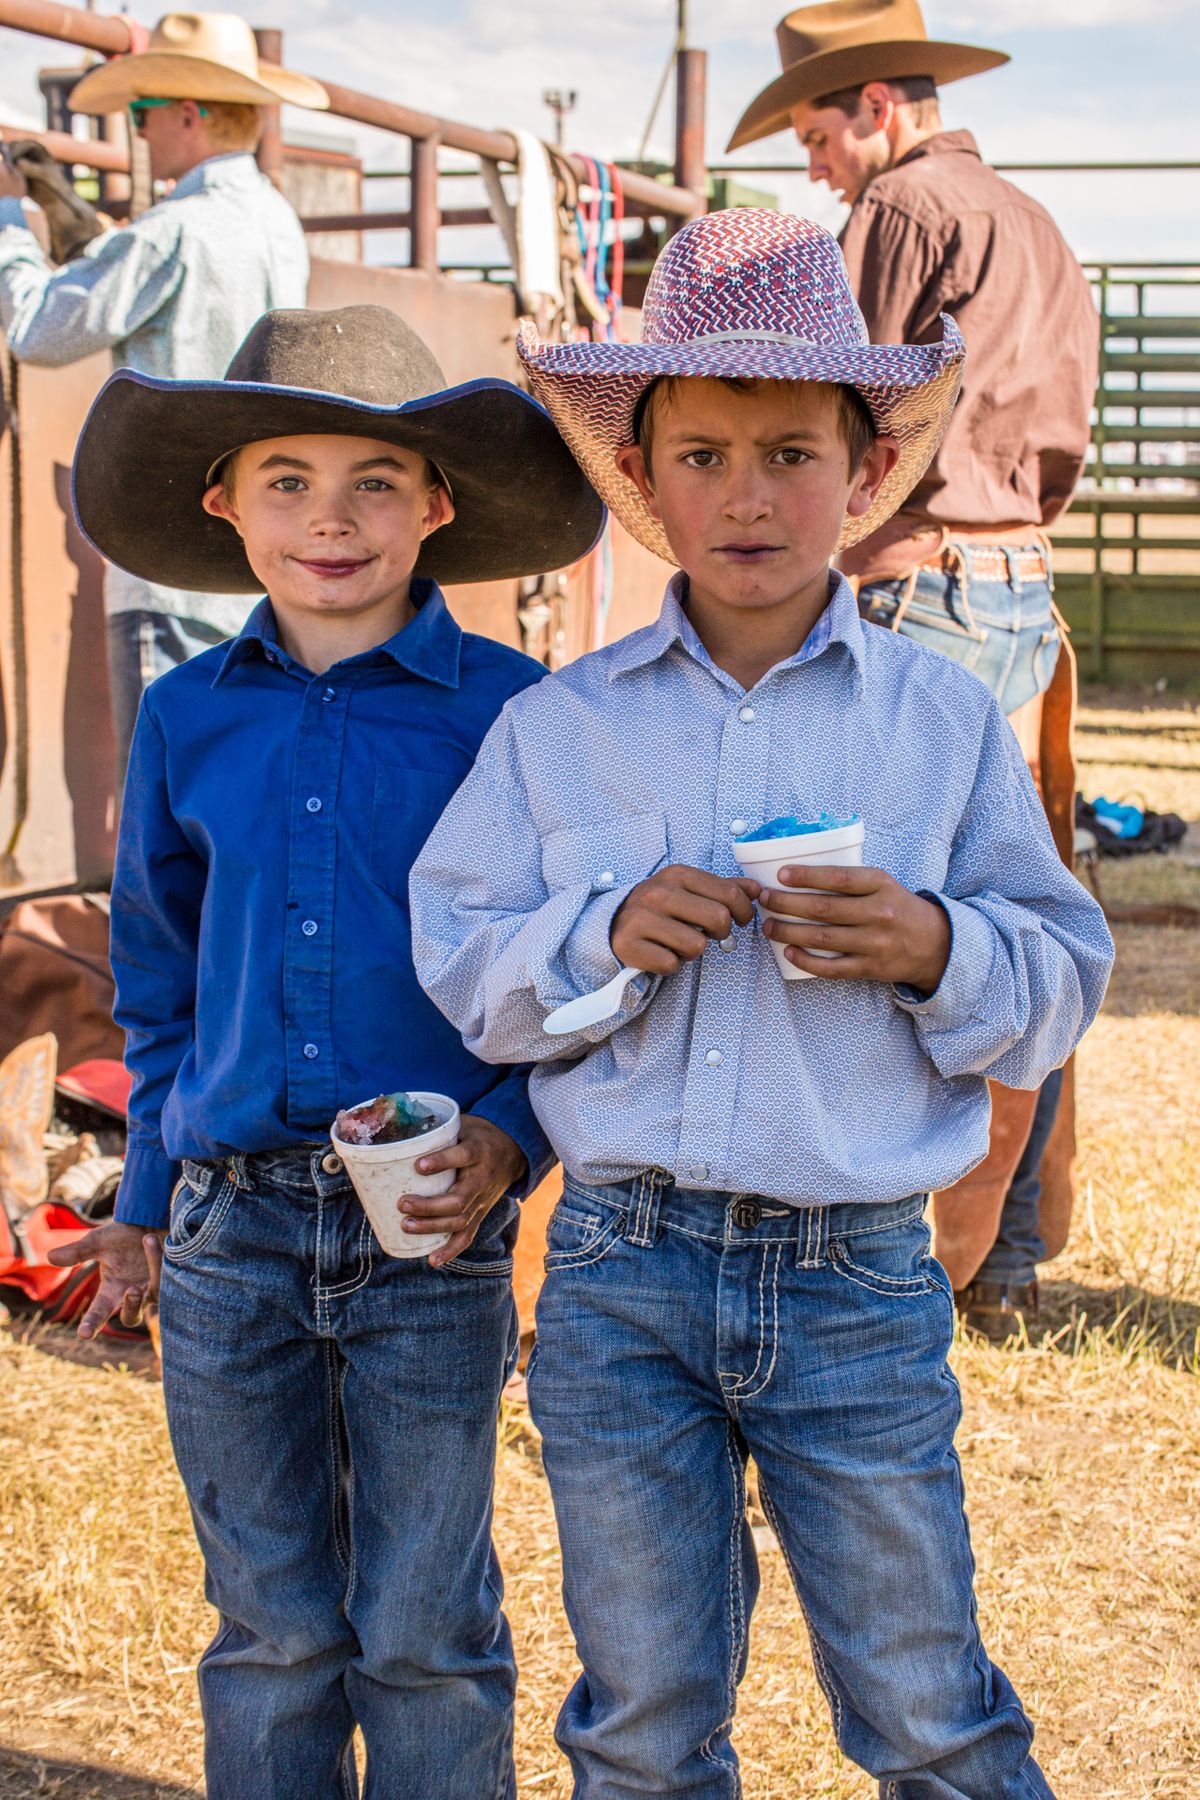 Future Cowboys of America, Ennis Montana